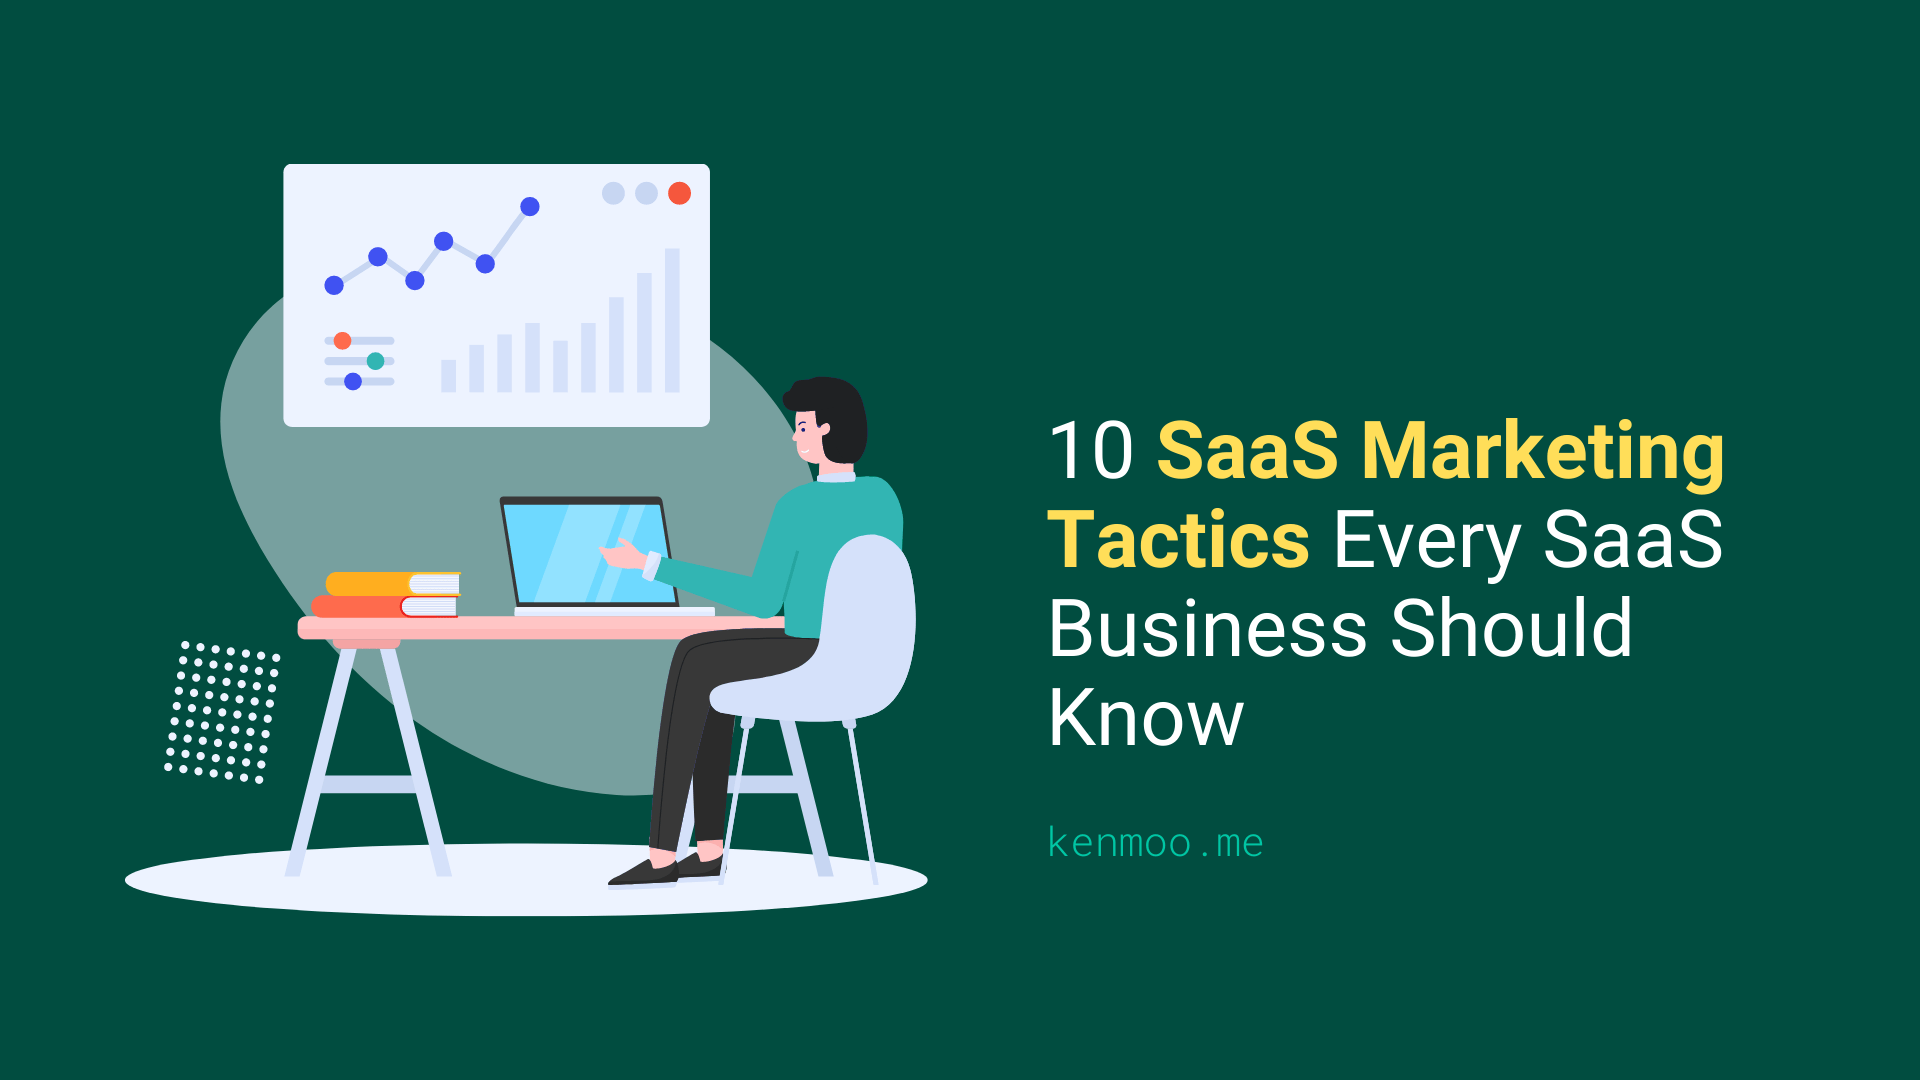 10 SaaS Marketing Tactics Every SaaS Business Should Know